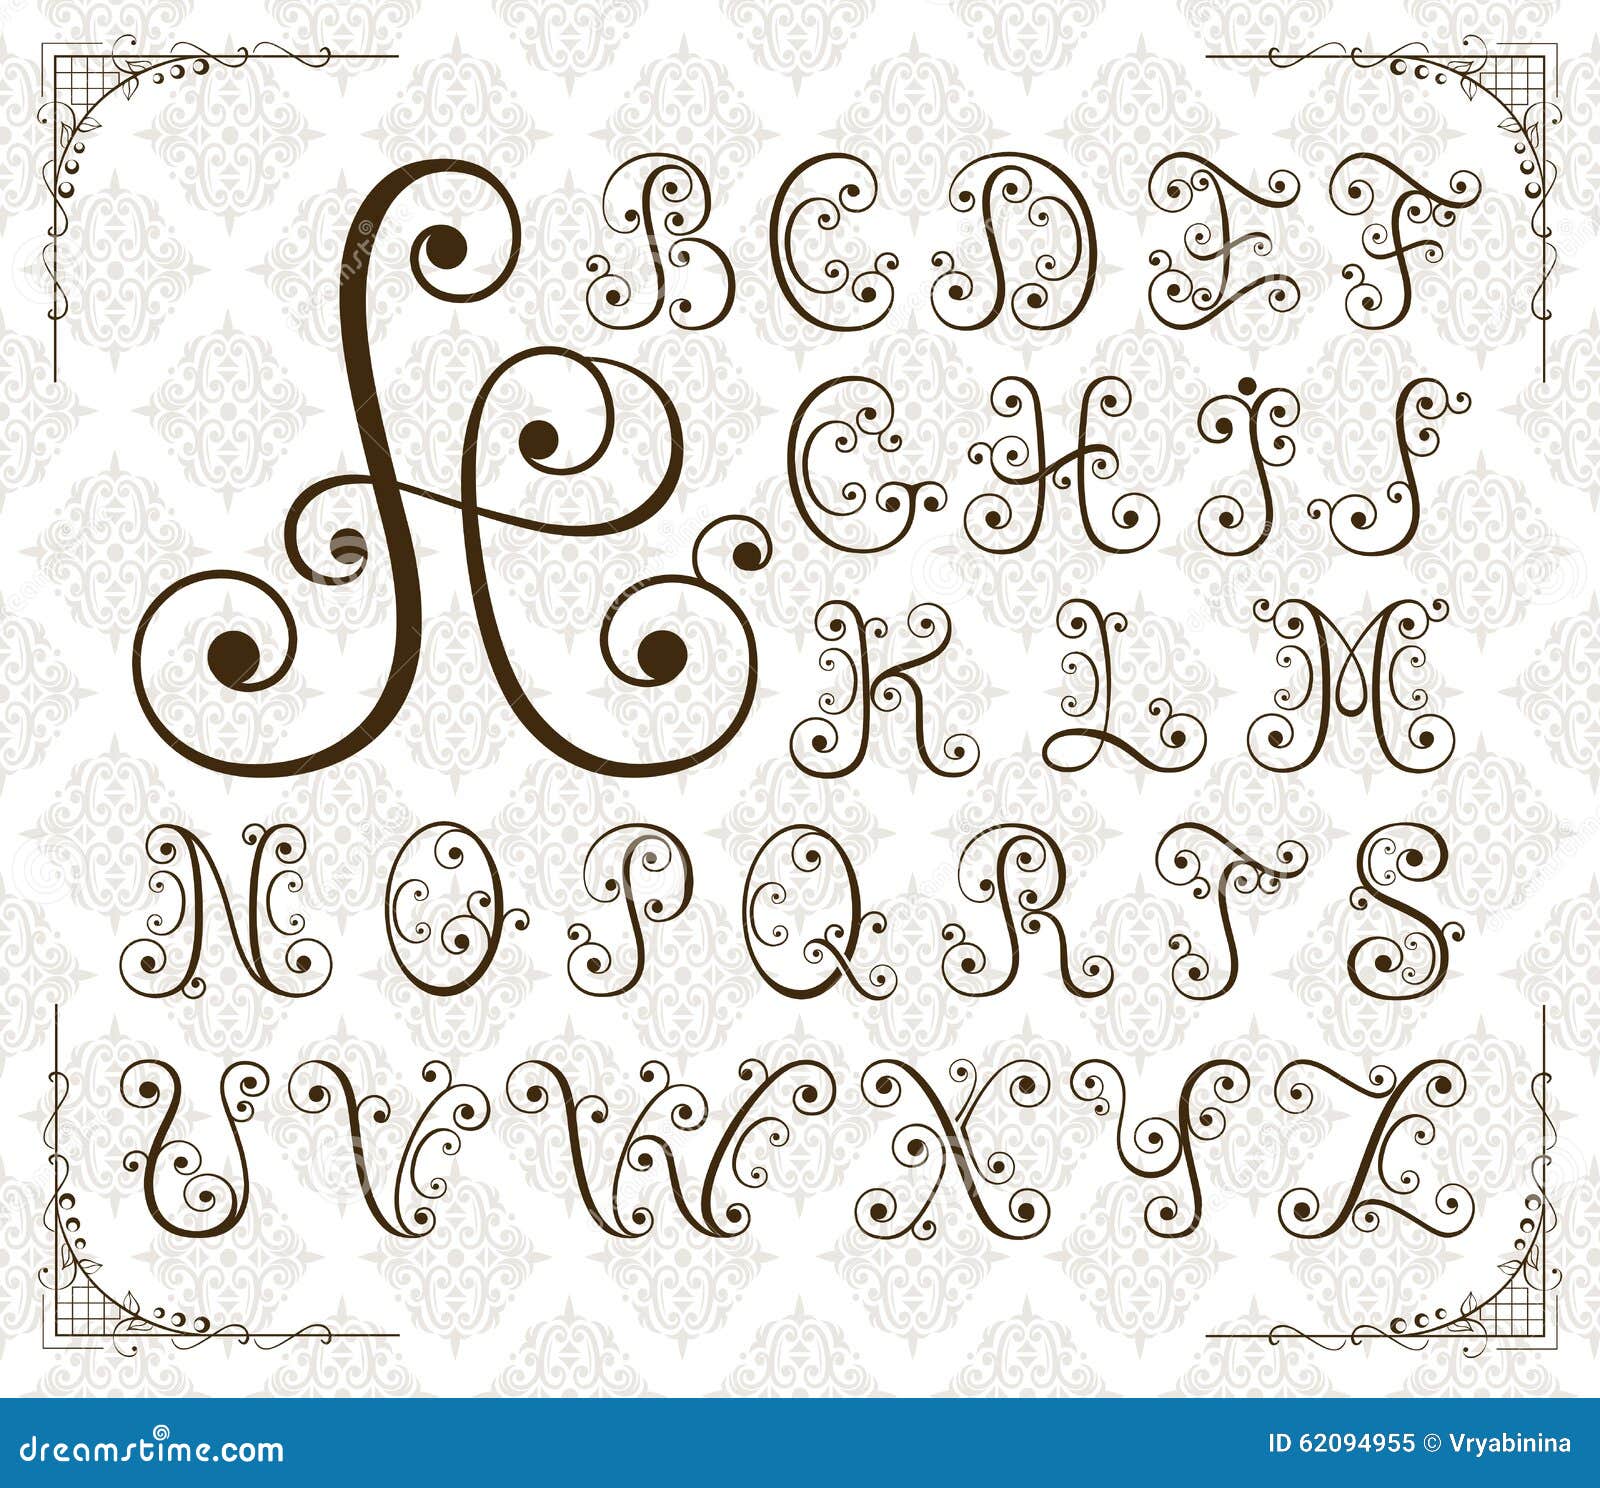 Swirly writing alphabets